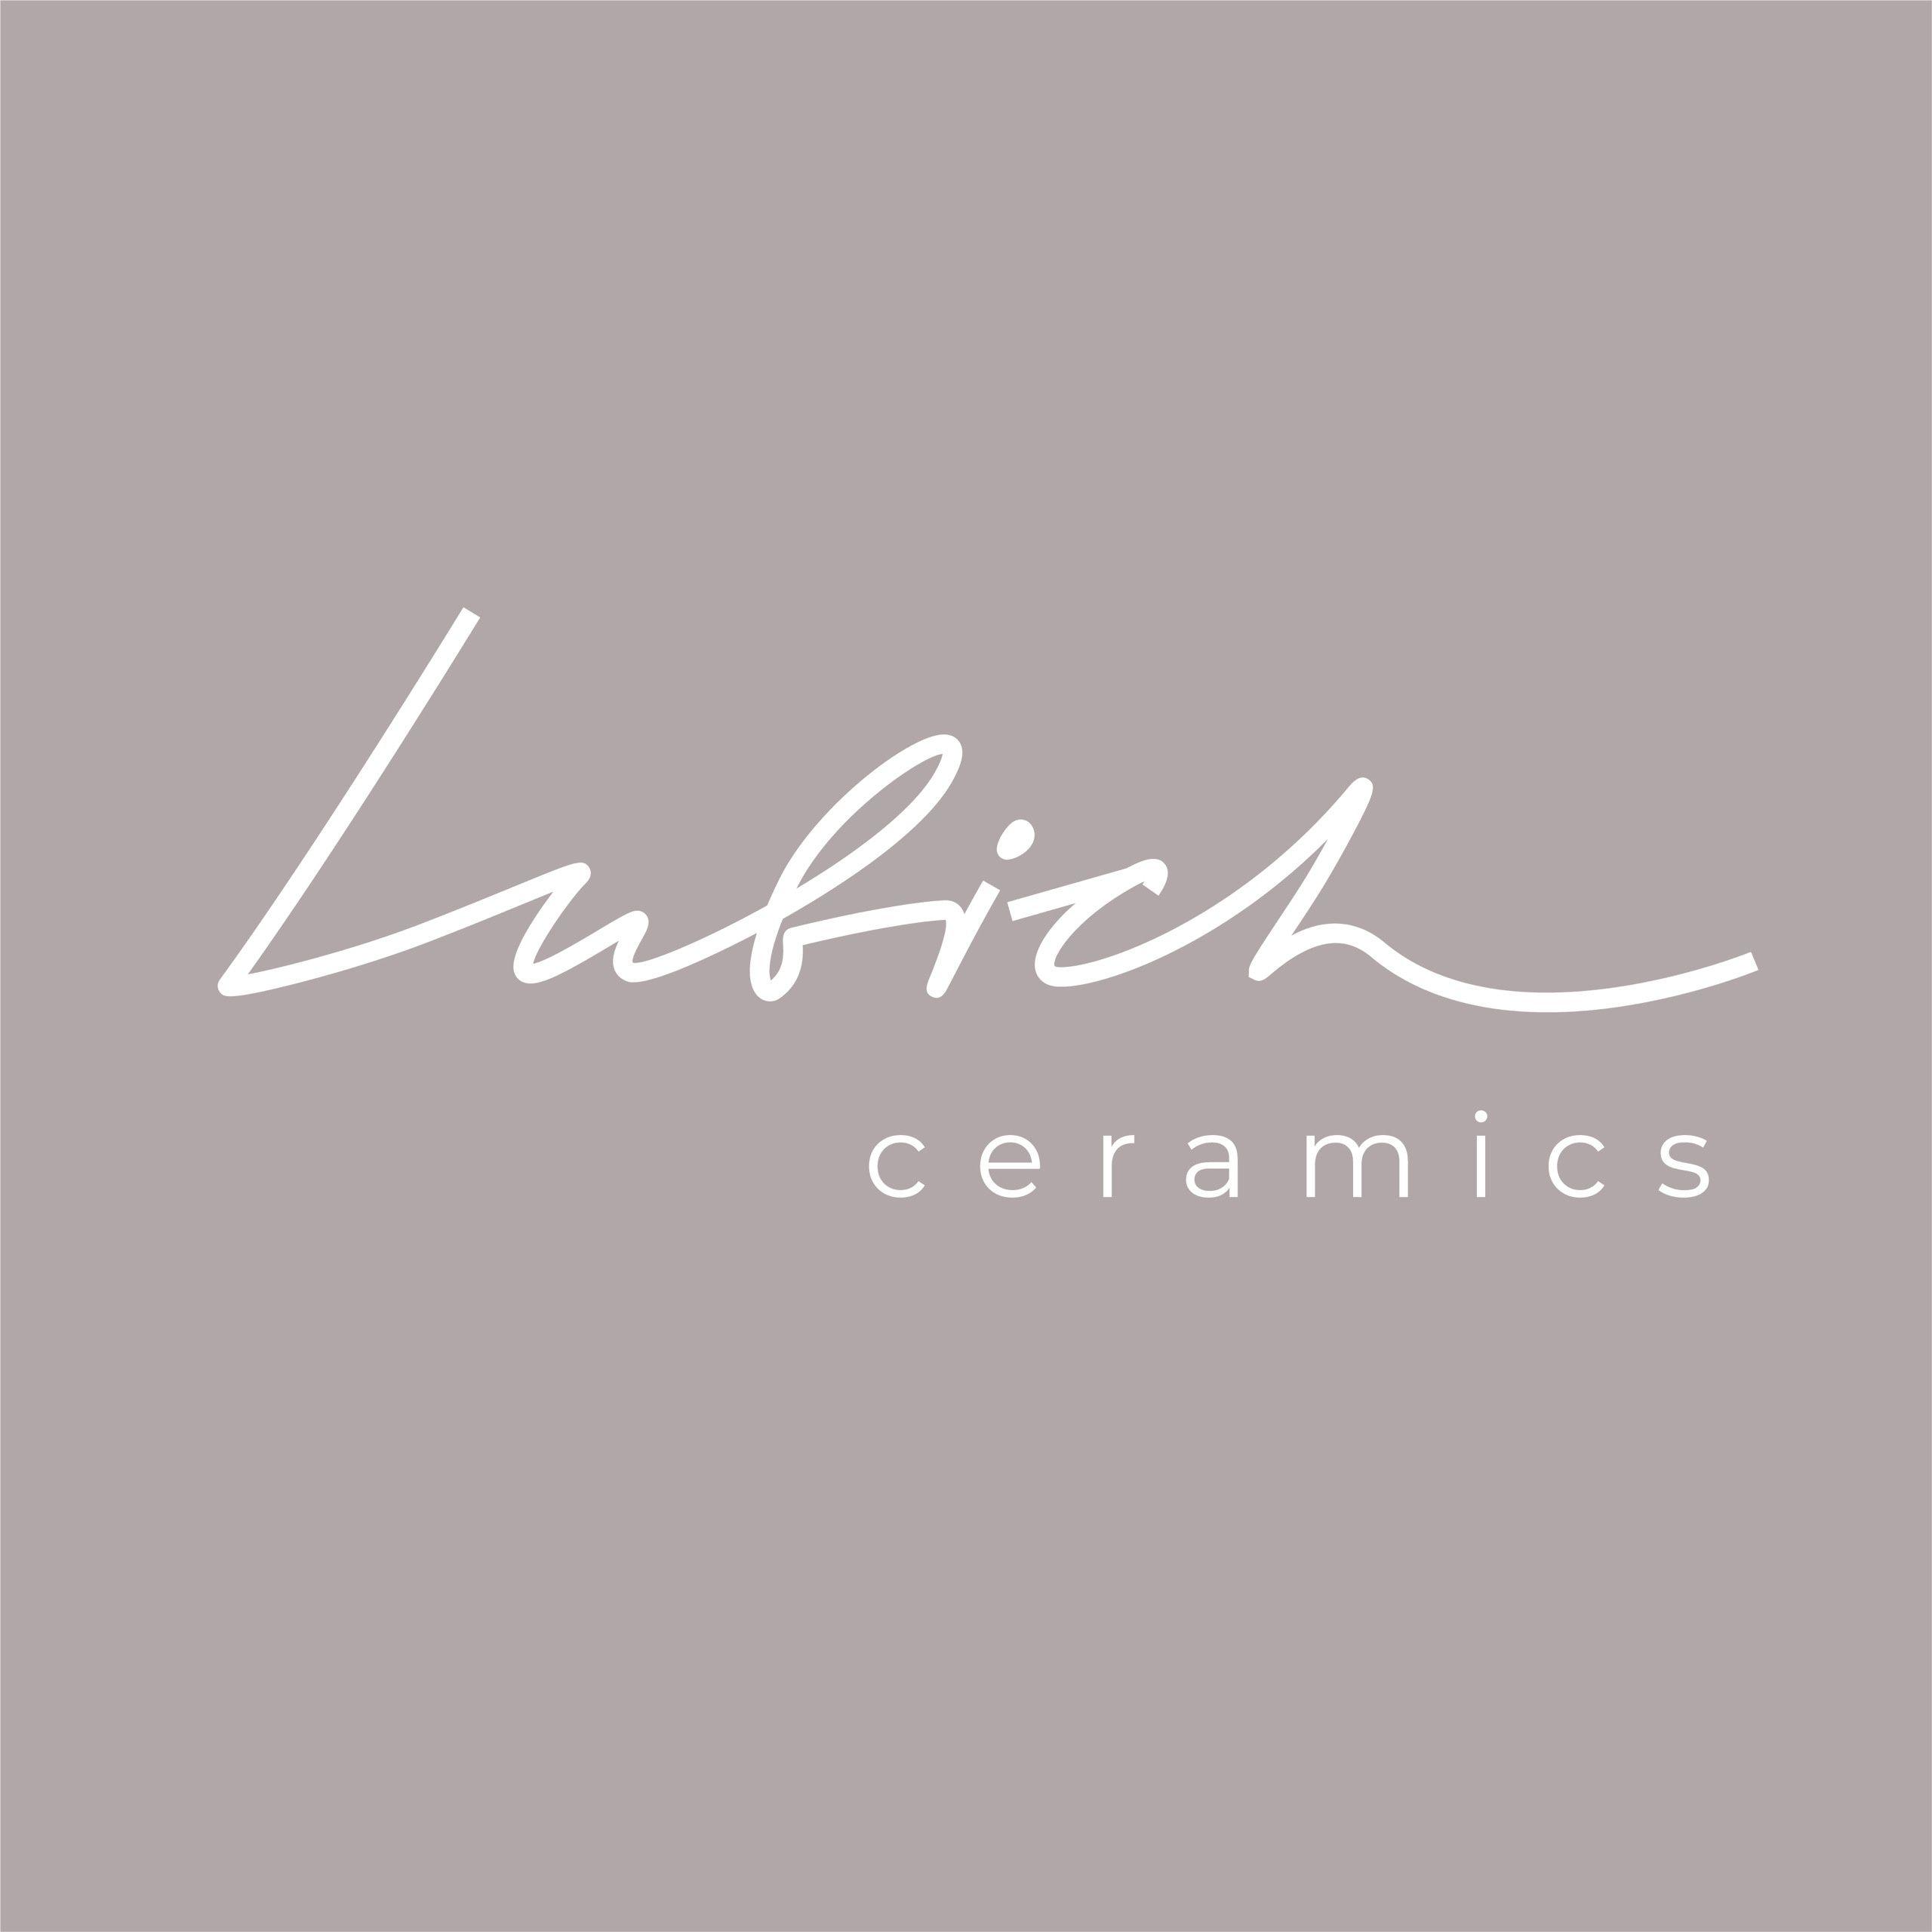 Lubich ceramics